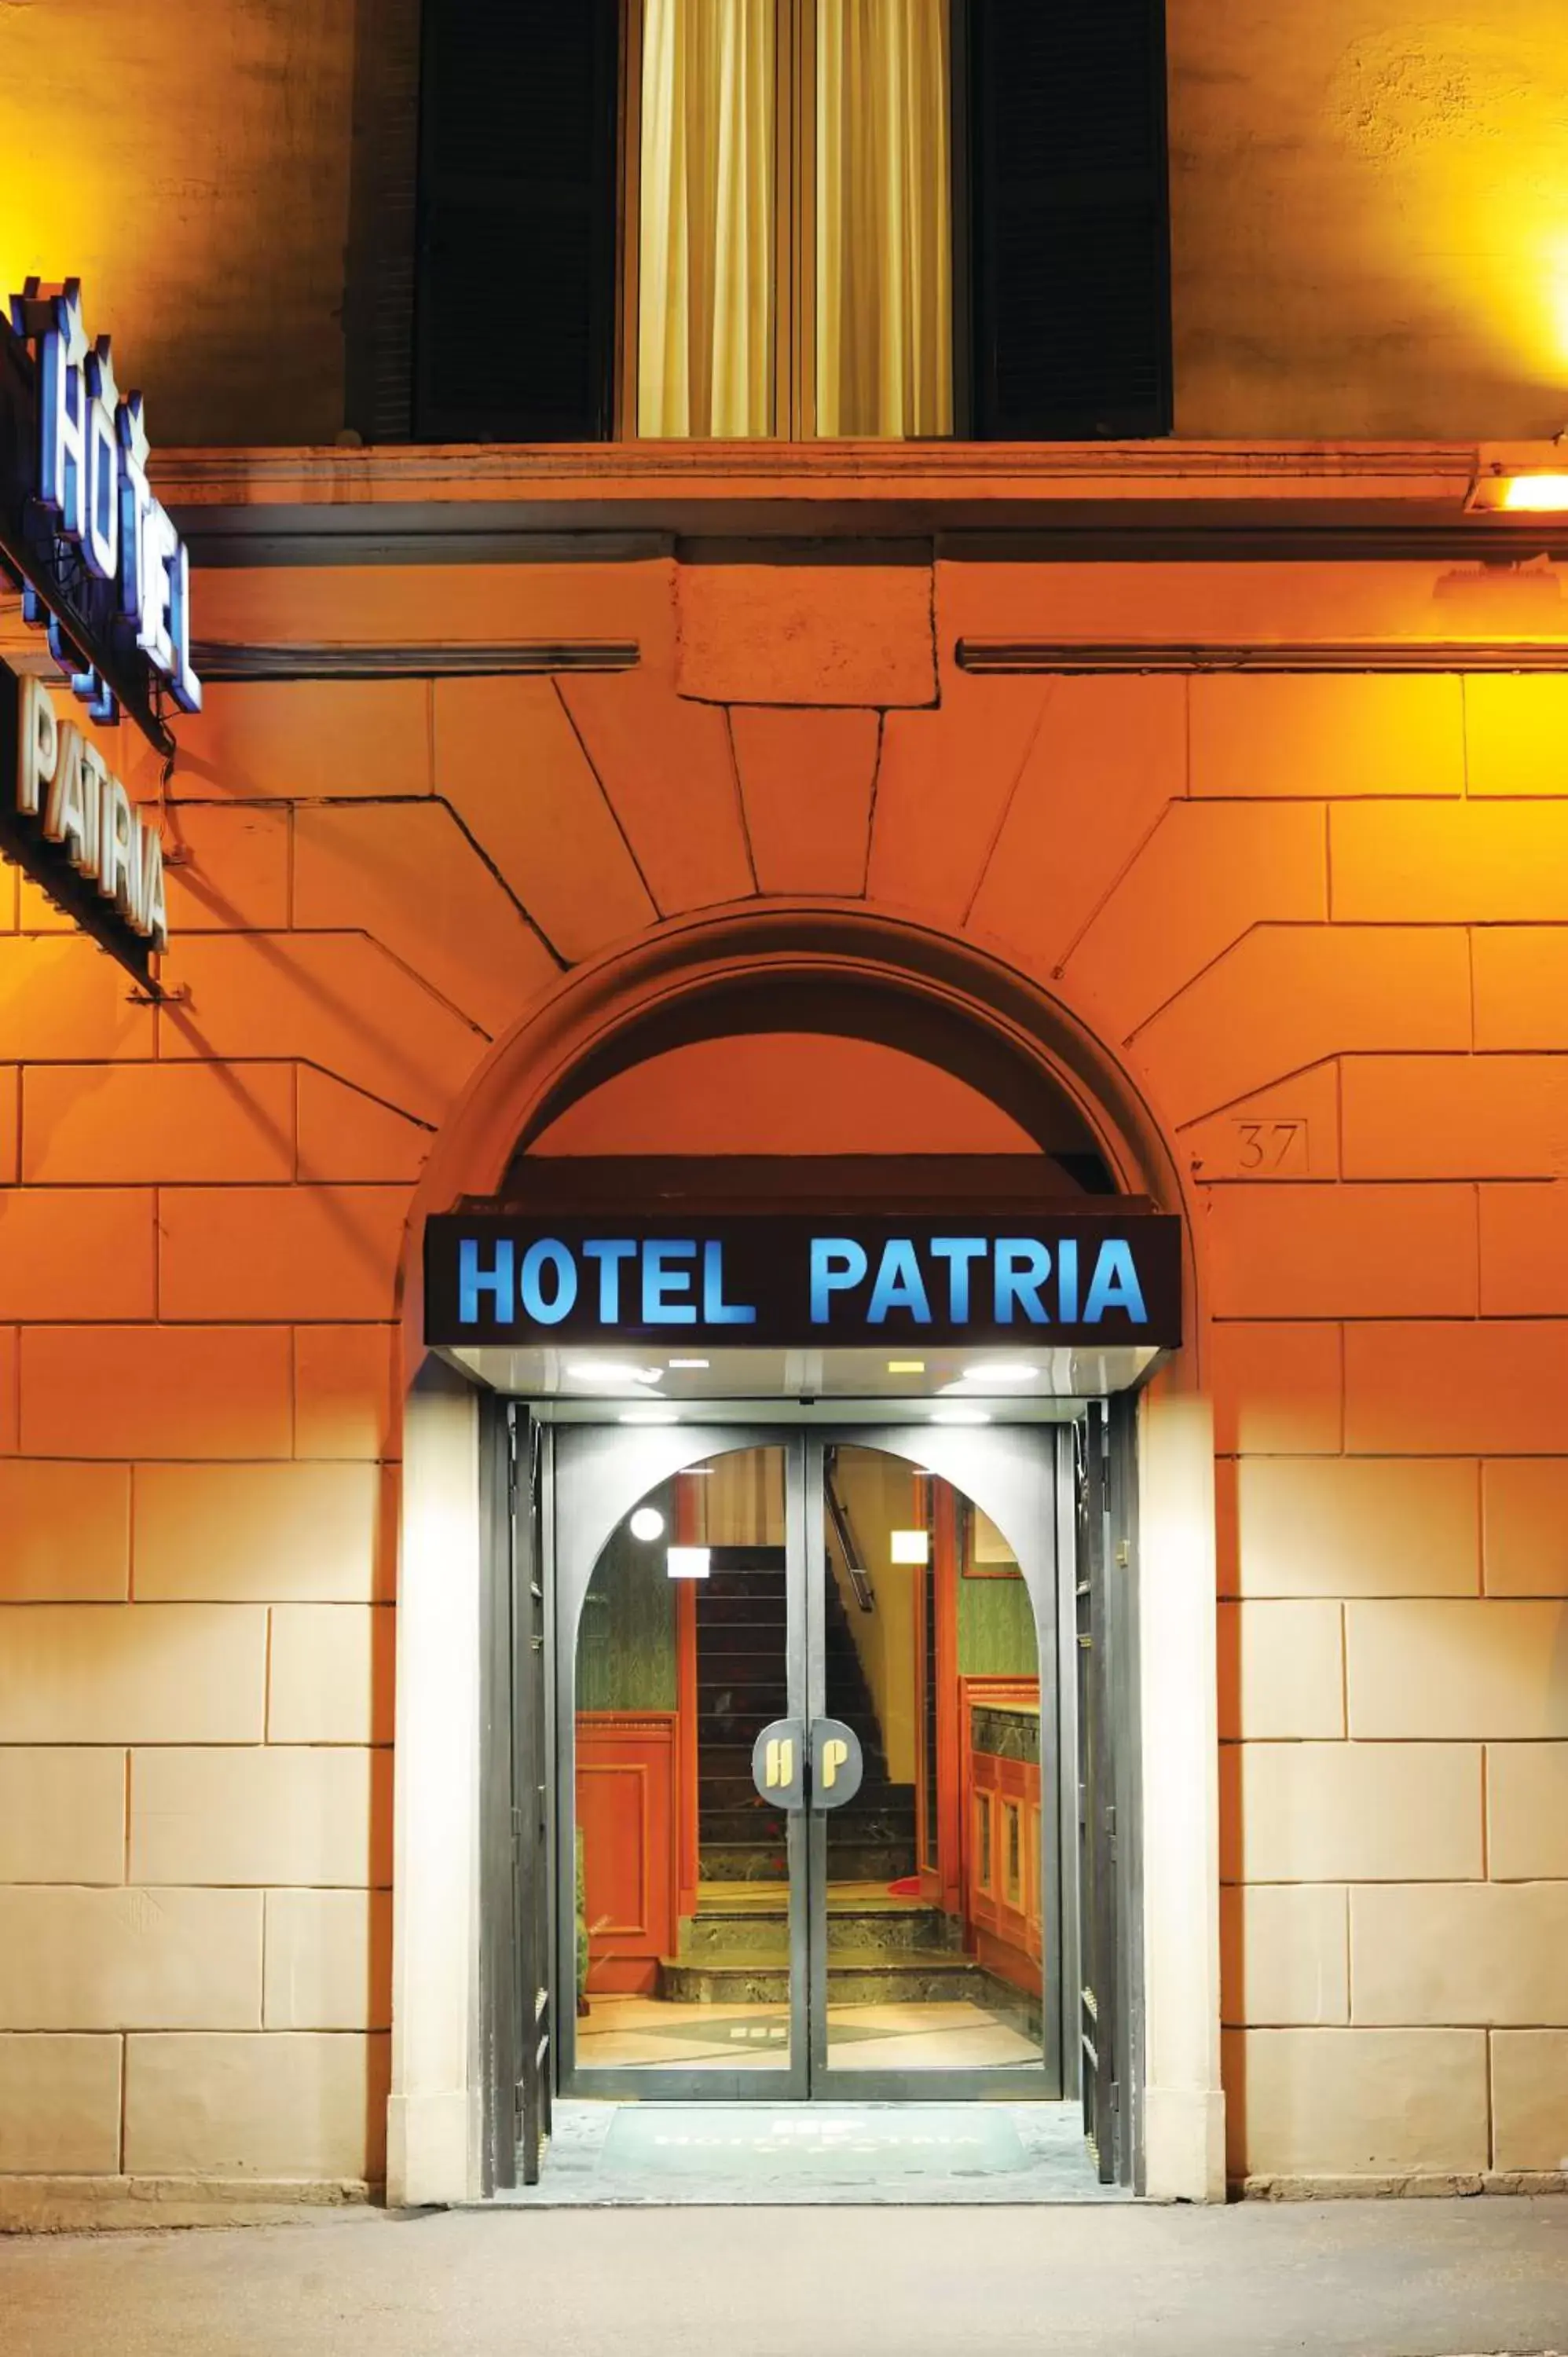 Street view in Hotel Patria